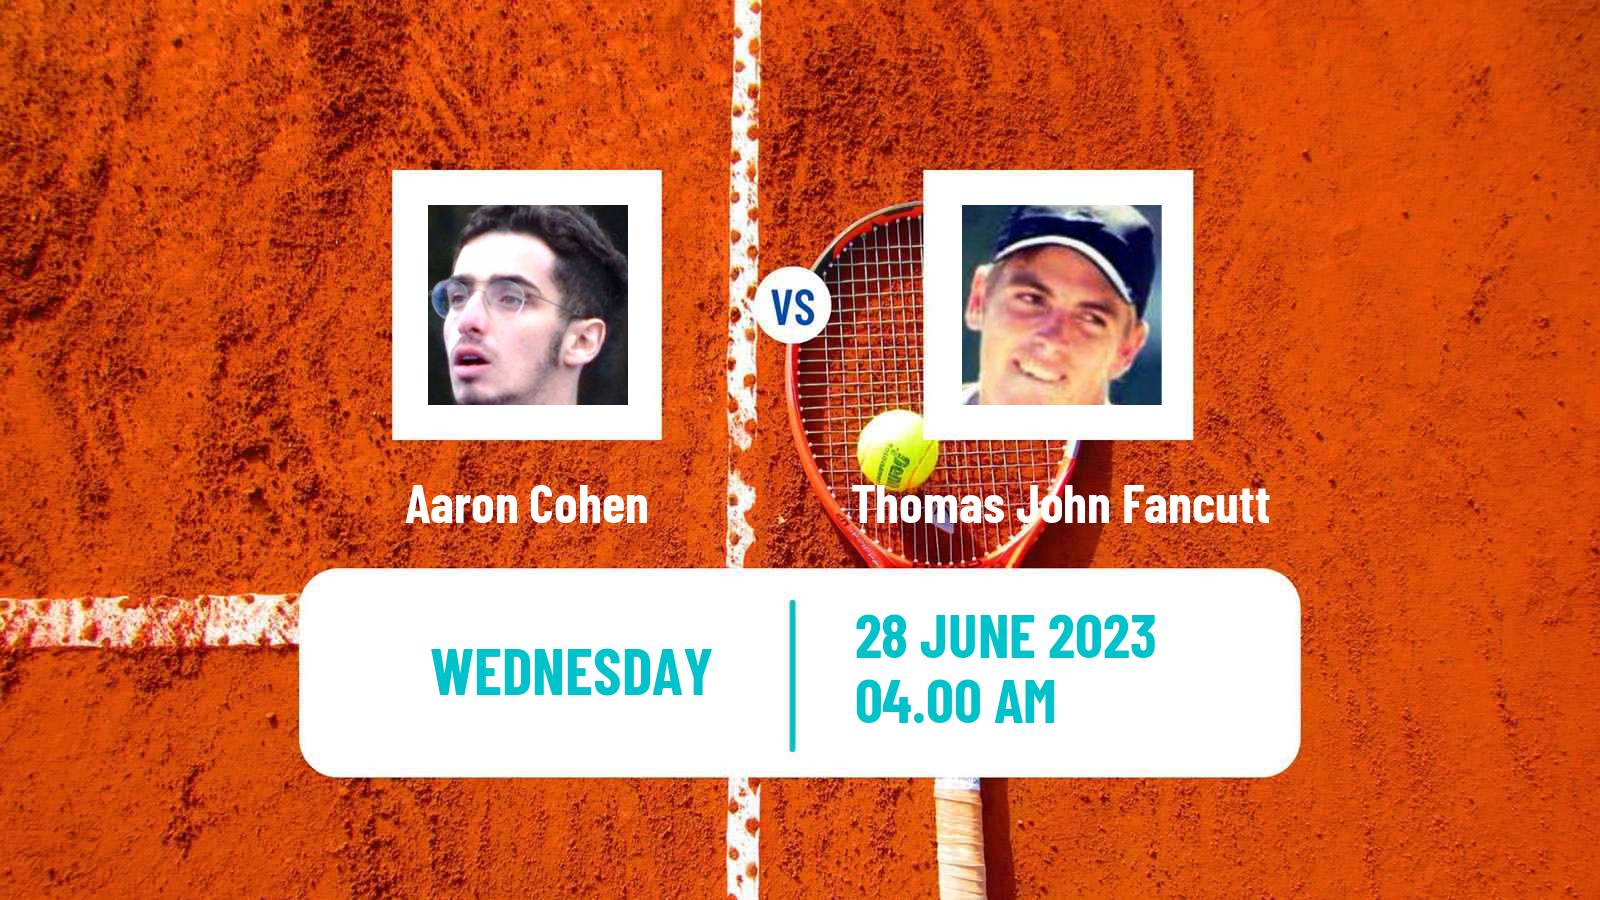 Tennis ITF M25 Netanya 2 Men Aaron Cohen - Thomas John Fancutt